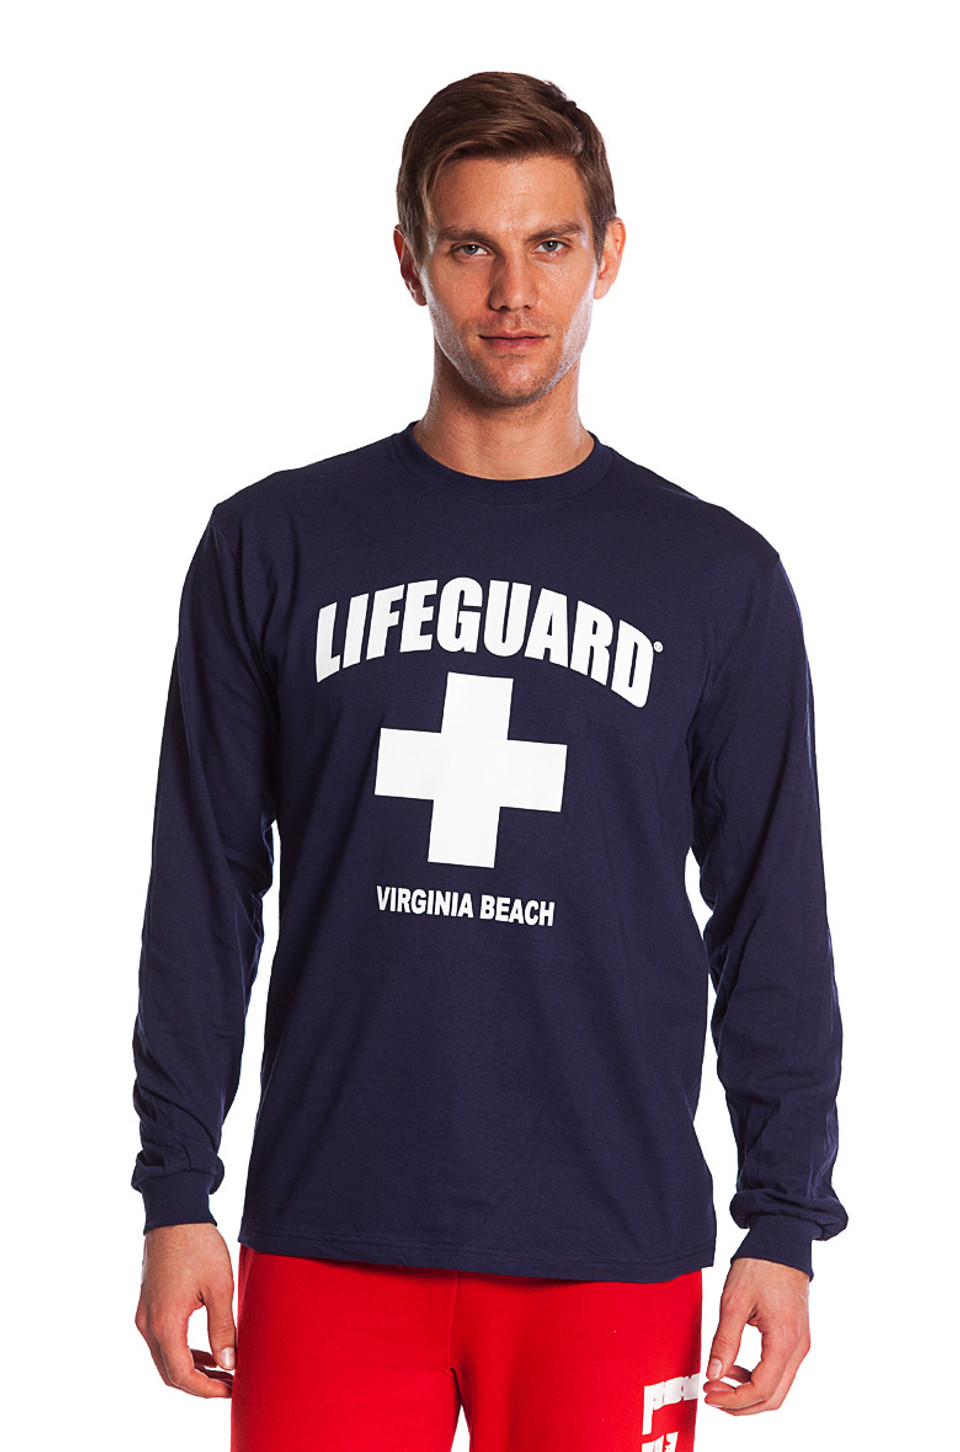 Lifeguard Long Sleeve printed T-Shirt